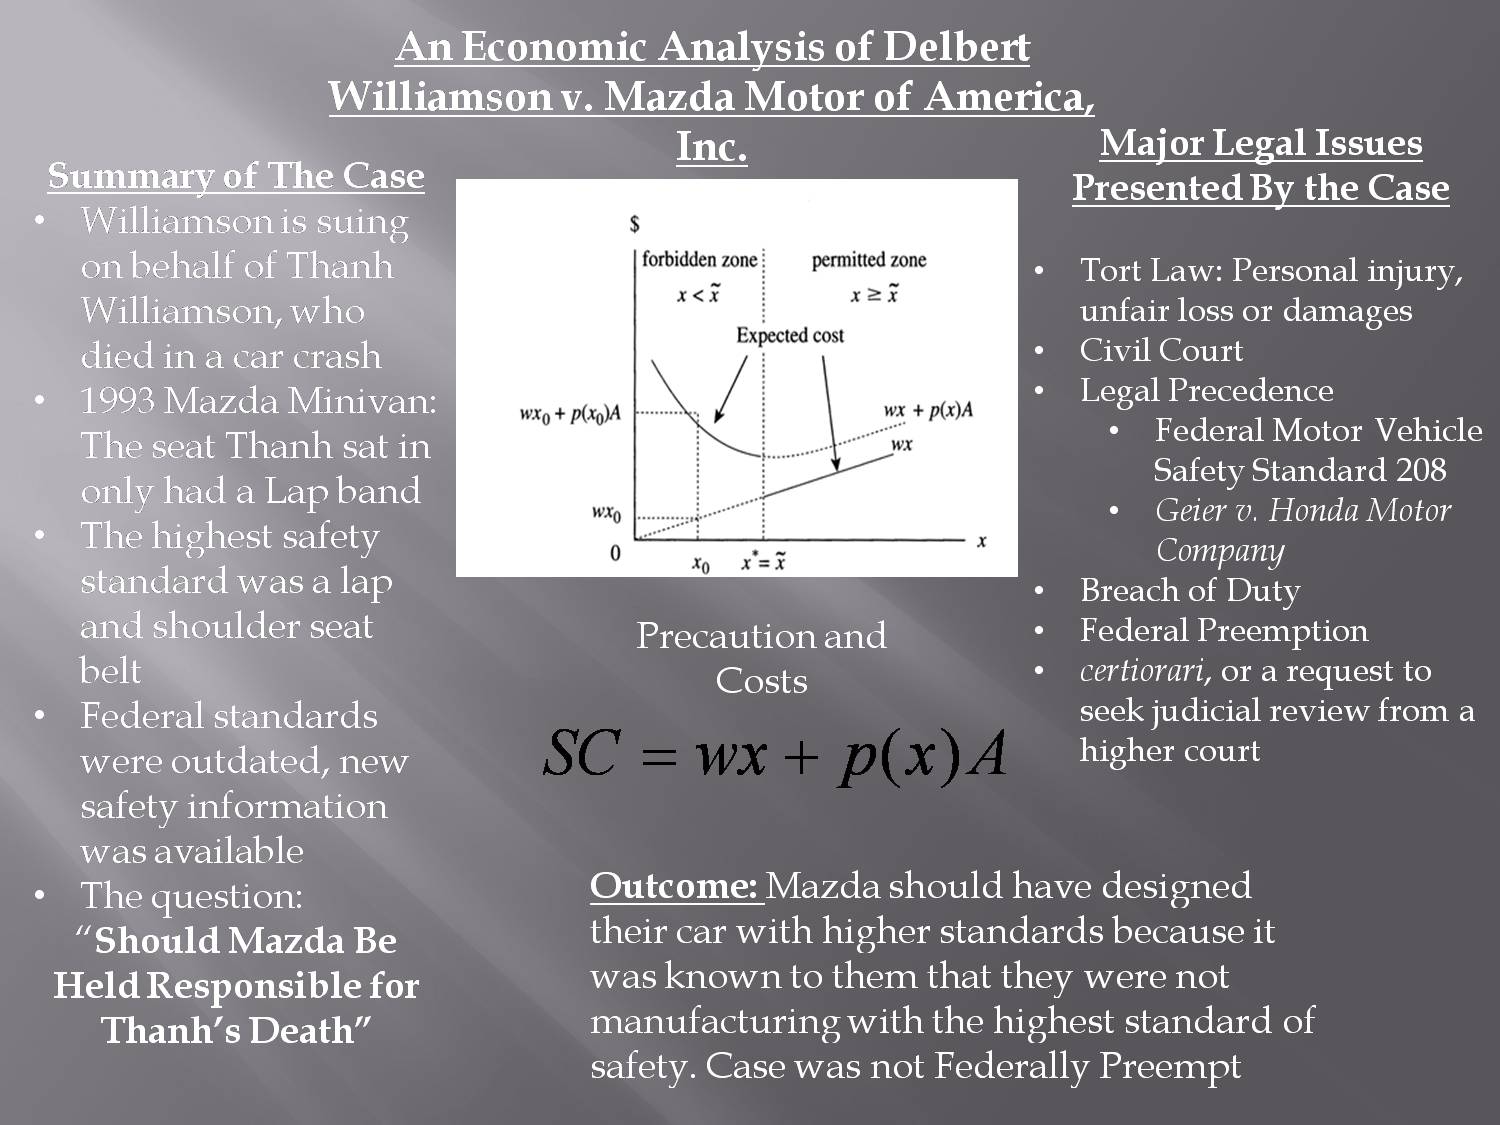 An Economic Analysis Of Delbert Williamson V. Mazda Motor Of America, Inc. by williamkluber